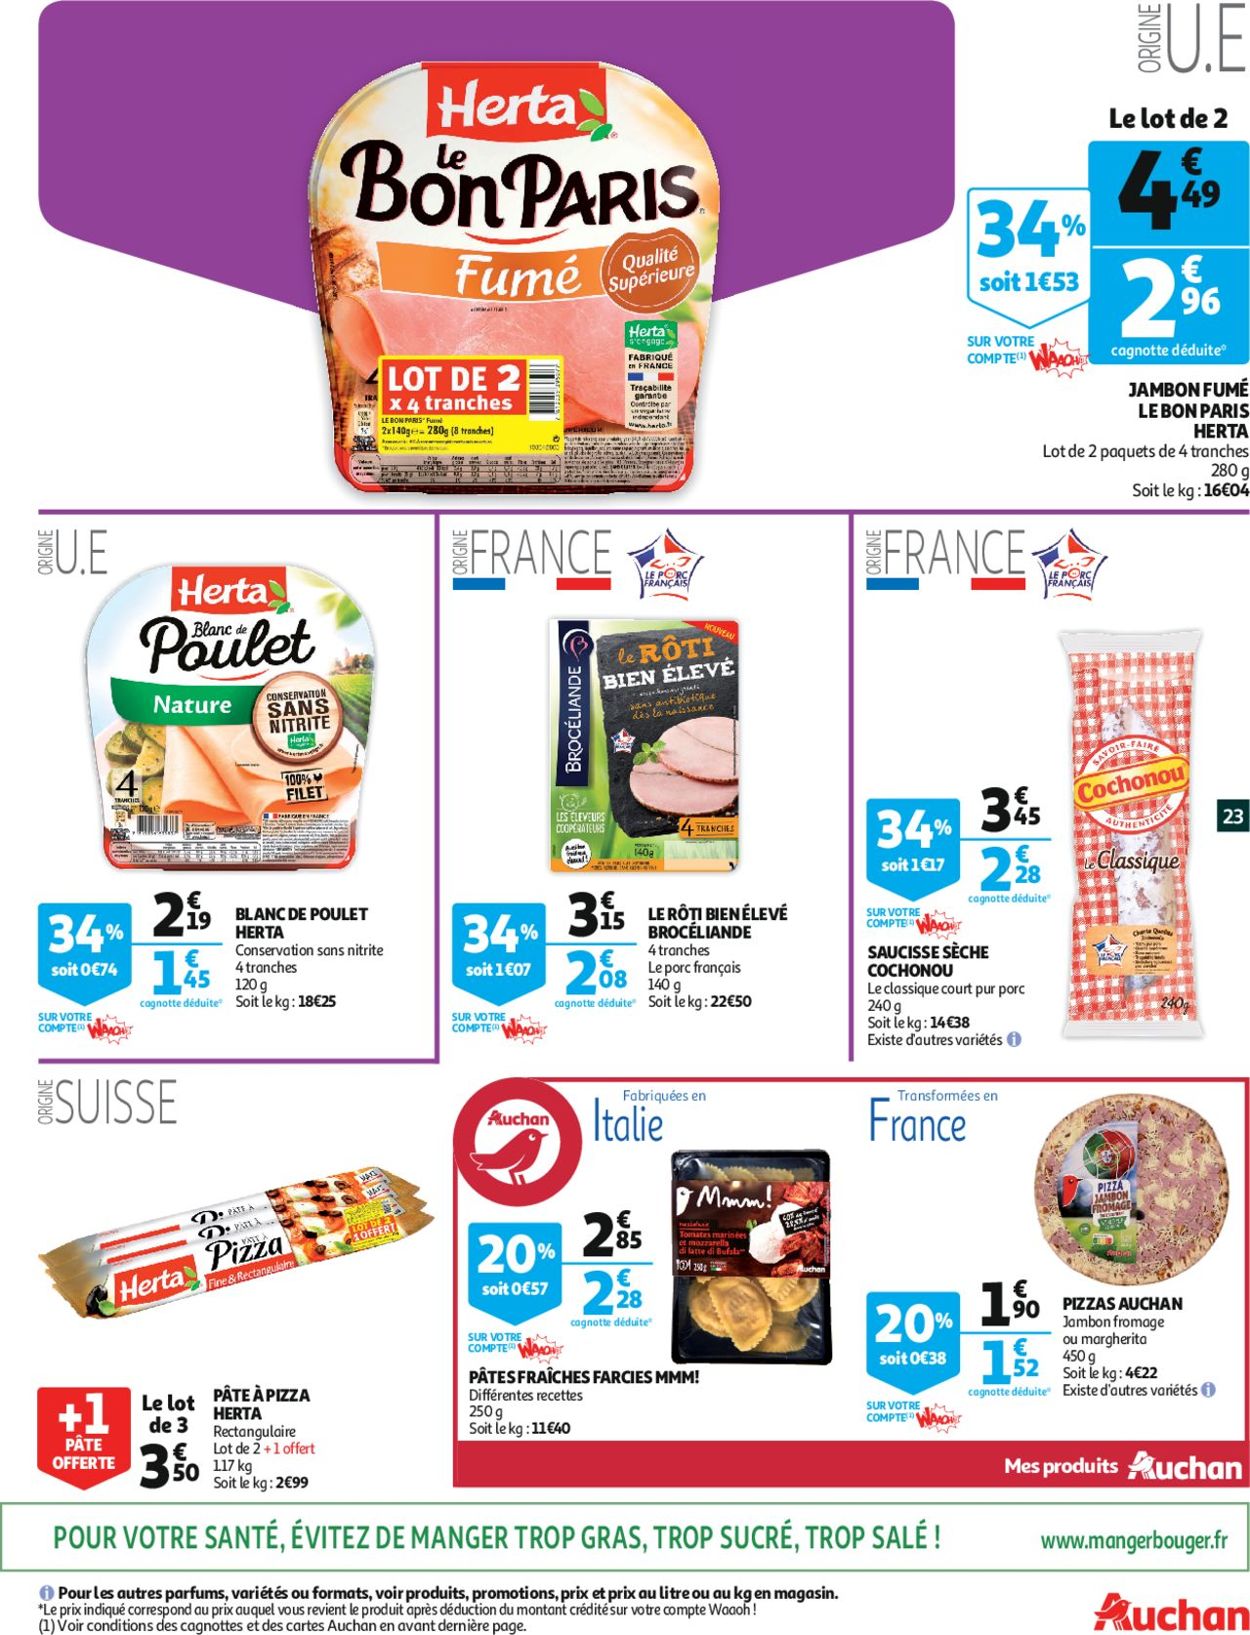 Auchan Catalogue - 10.07-16.07.2019 (Page 23)